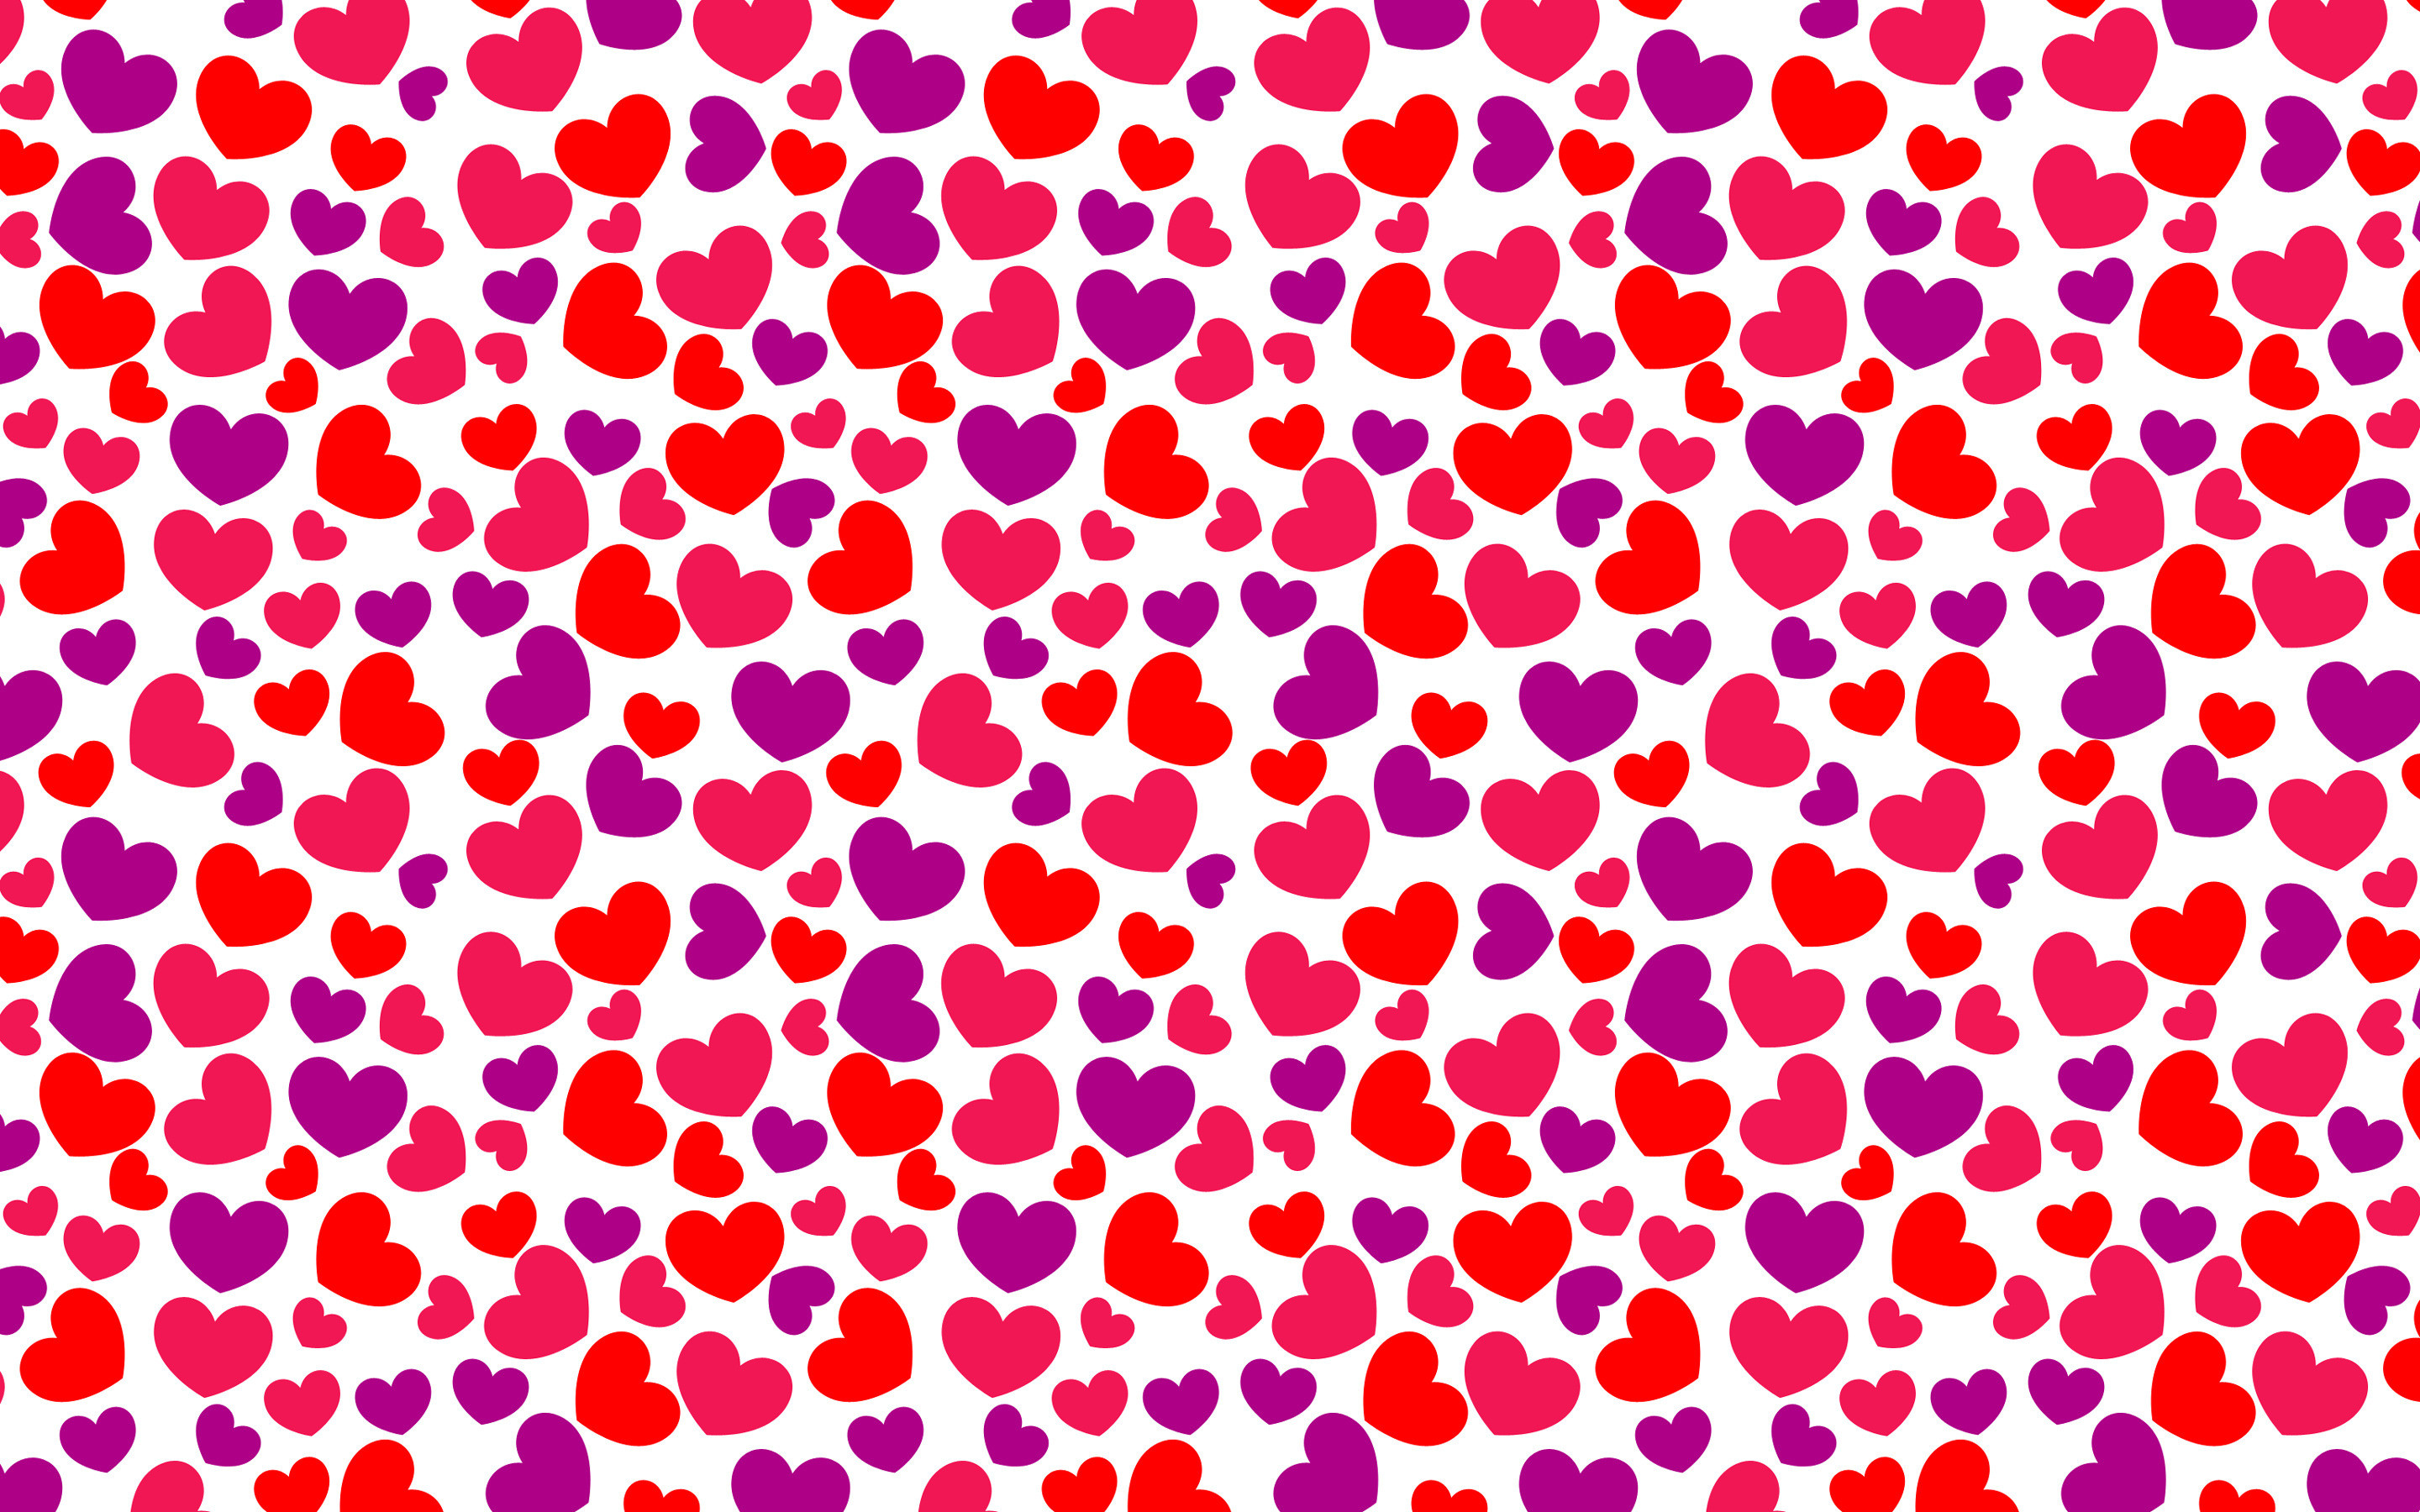 Heart Pattern Hd Wallpaper 2880x1800 2880x1800